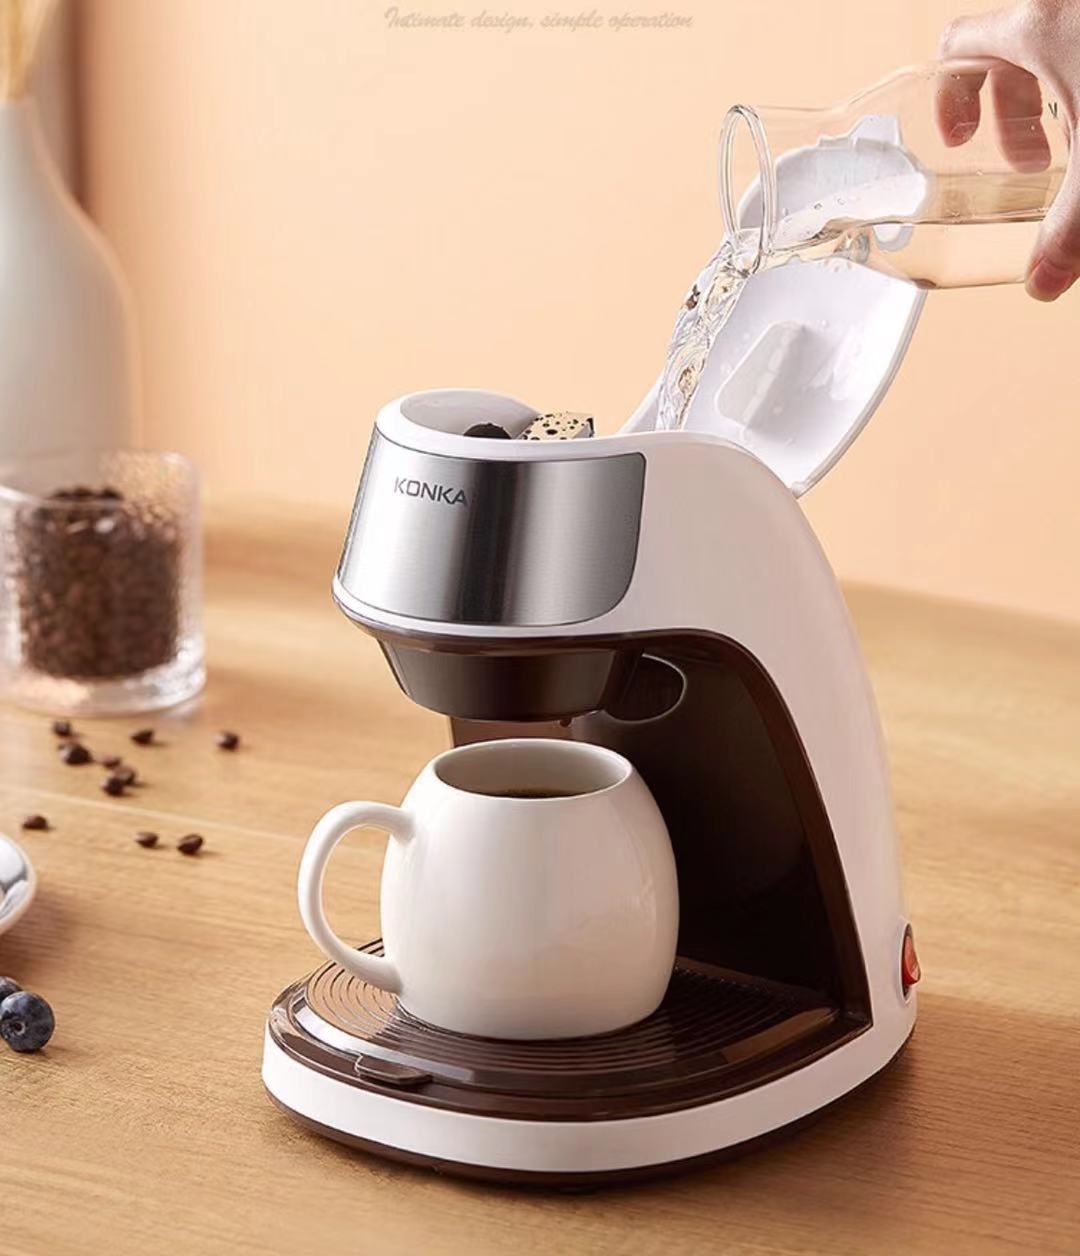 NEWเครื่องชงกาแฟ กาสำหรับชงชาและกาแฟ แบบSingle Serve 300ml Coffee Thermal Dripพร้อมแก้วกาแฟ แบรนด์KONKAแท้